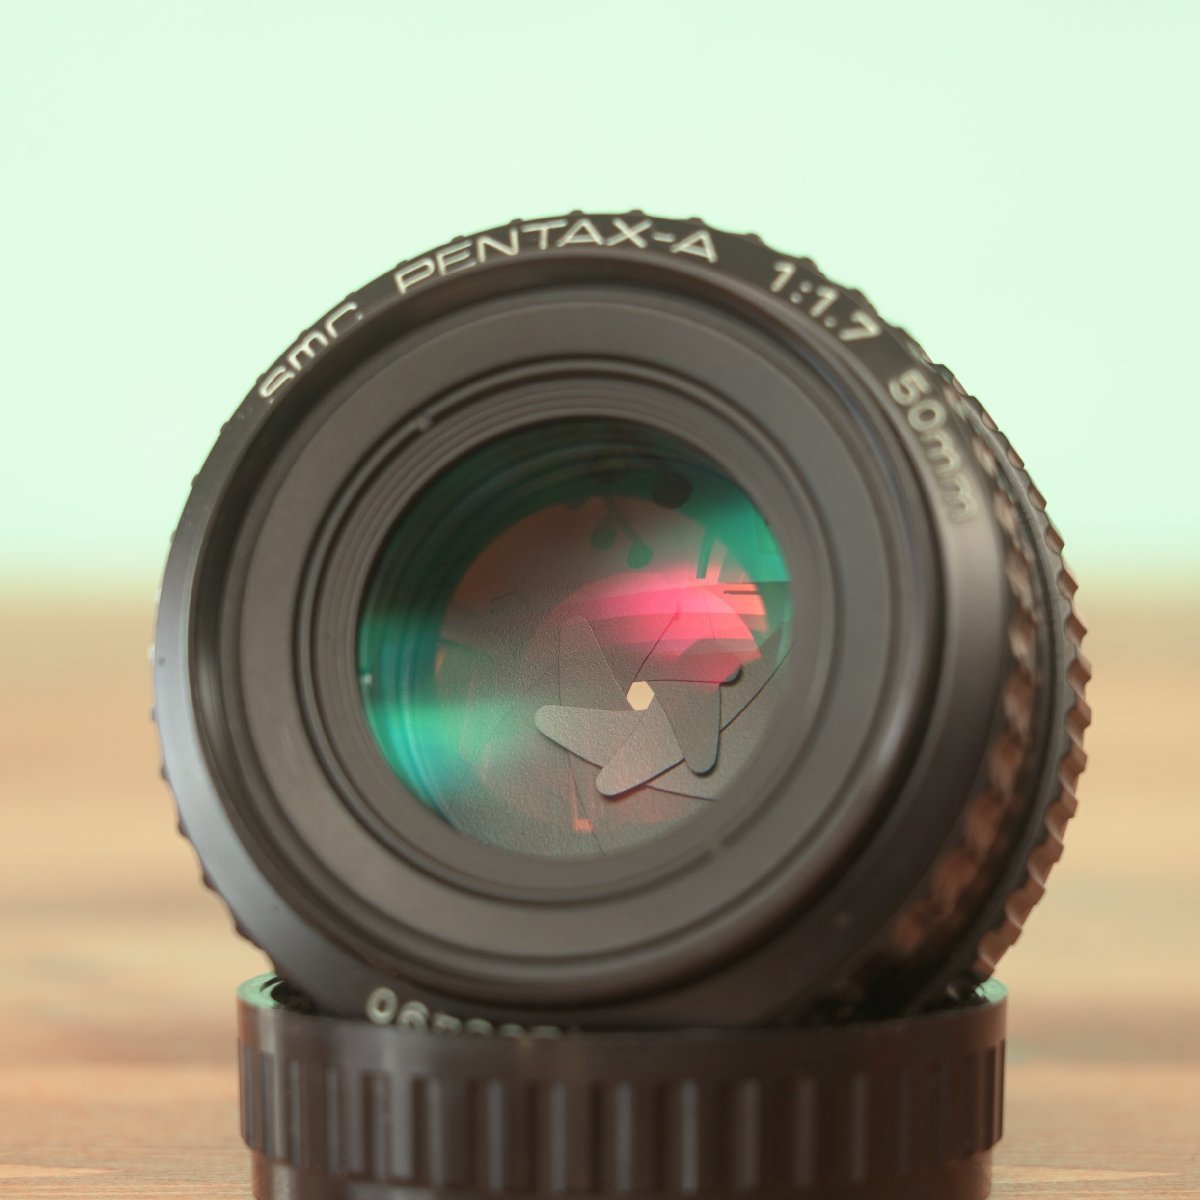 SMC PENTAX-A 50mm f1.7 単焦点 オールドレンズ #90_画像7